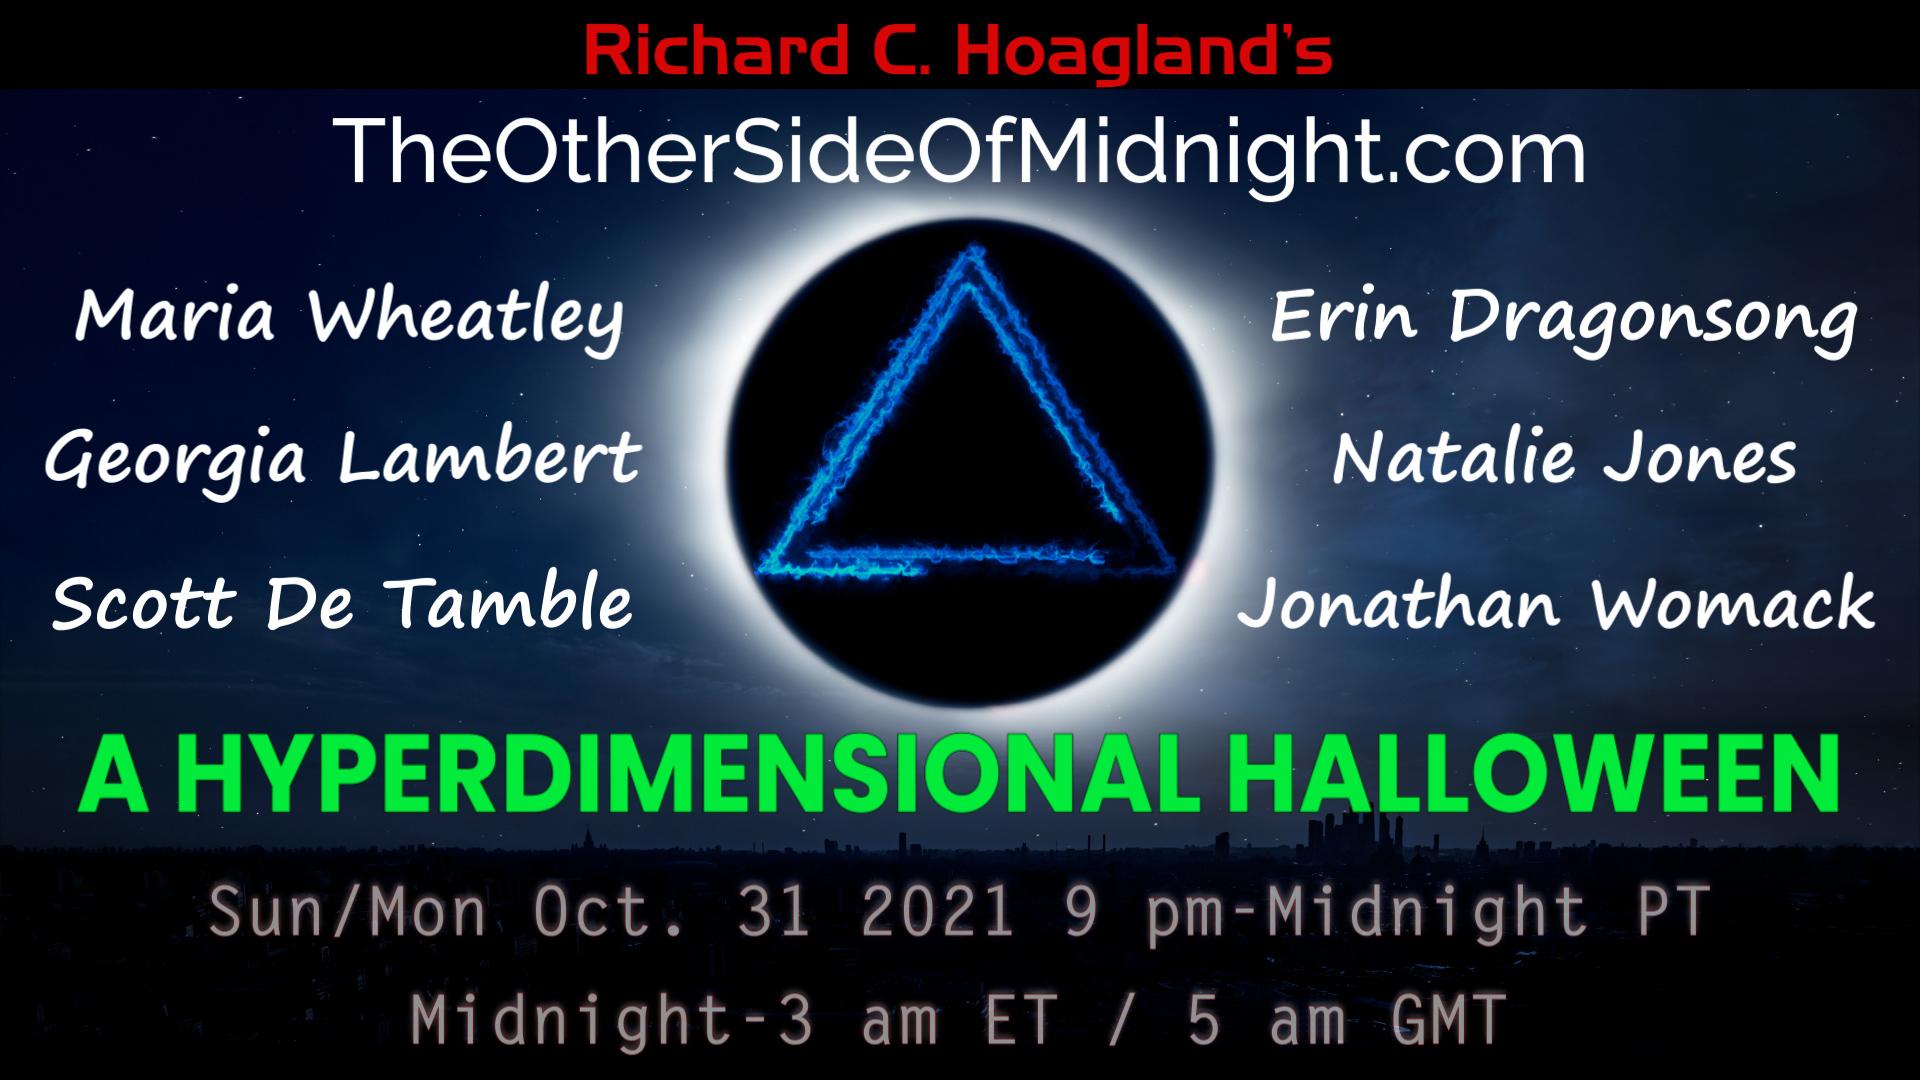 Hyperdimensional Halloween 2021 Samhain -The Other Side Of Midnight Radio Show w Richard Hoagland